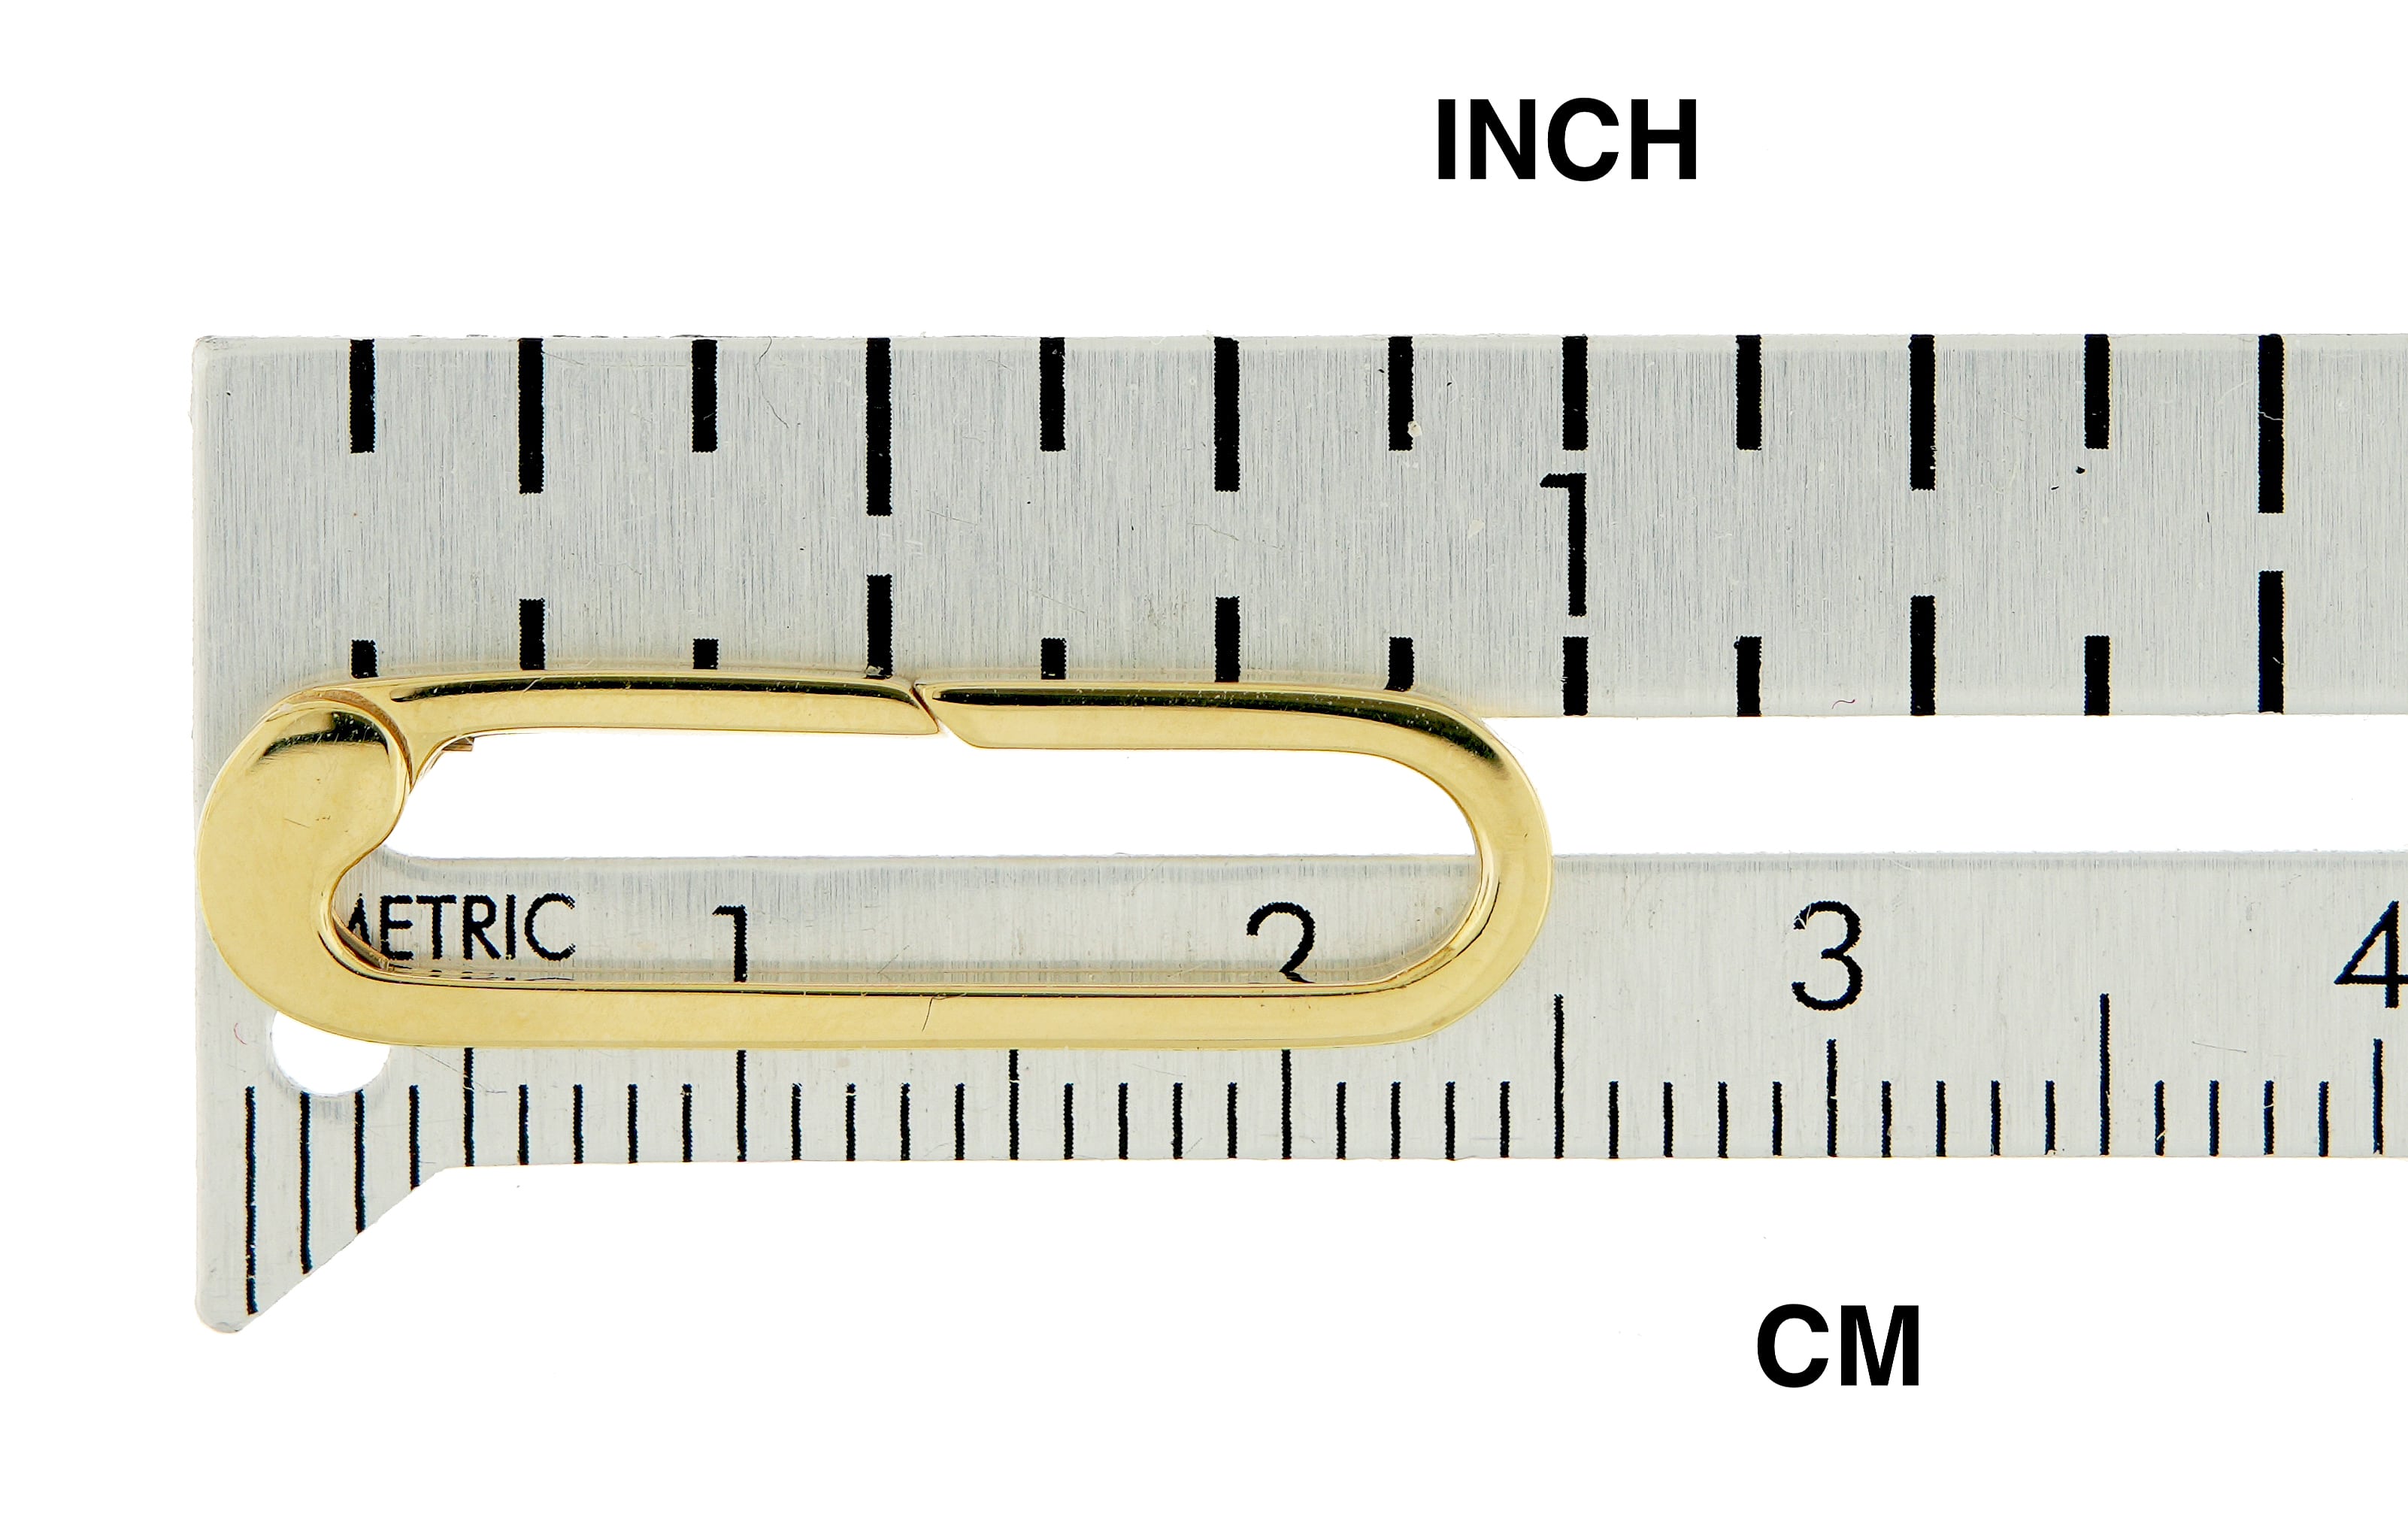 14k Yellow White Rose Gold Elongated Oblong Paper Clip Push Clasp Lock Connector Pendant Charm Hanger Bail Enhancer